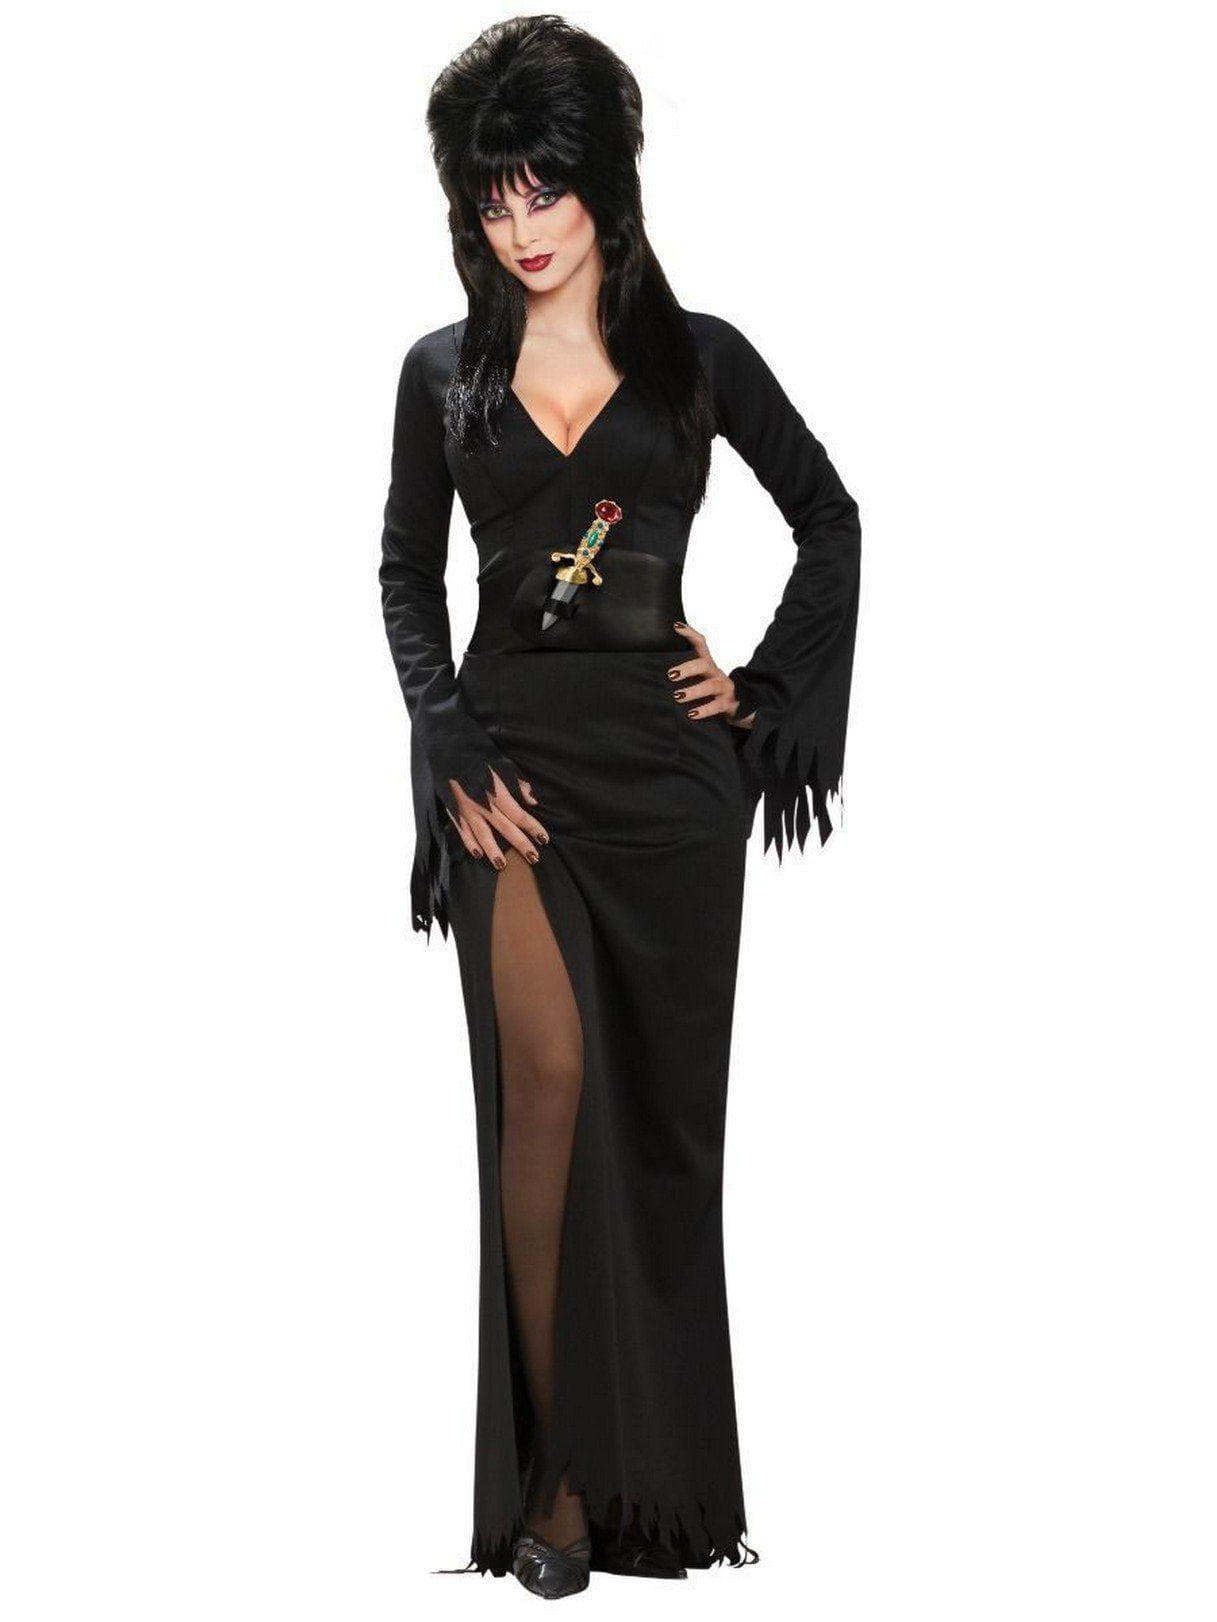 Adult Elvira Mistress of the Dark Costume - costumes.com